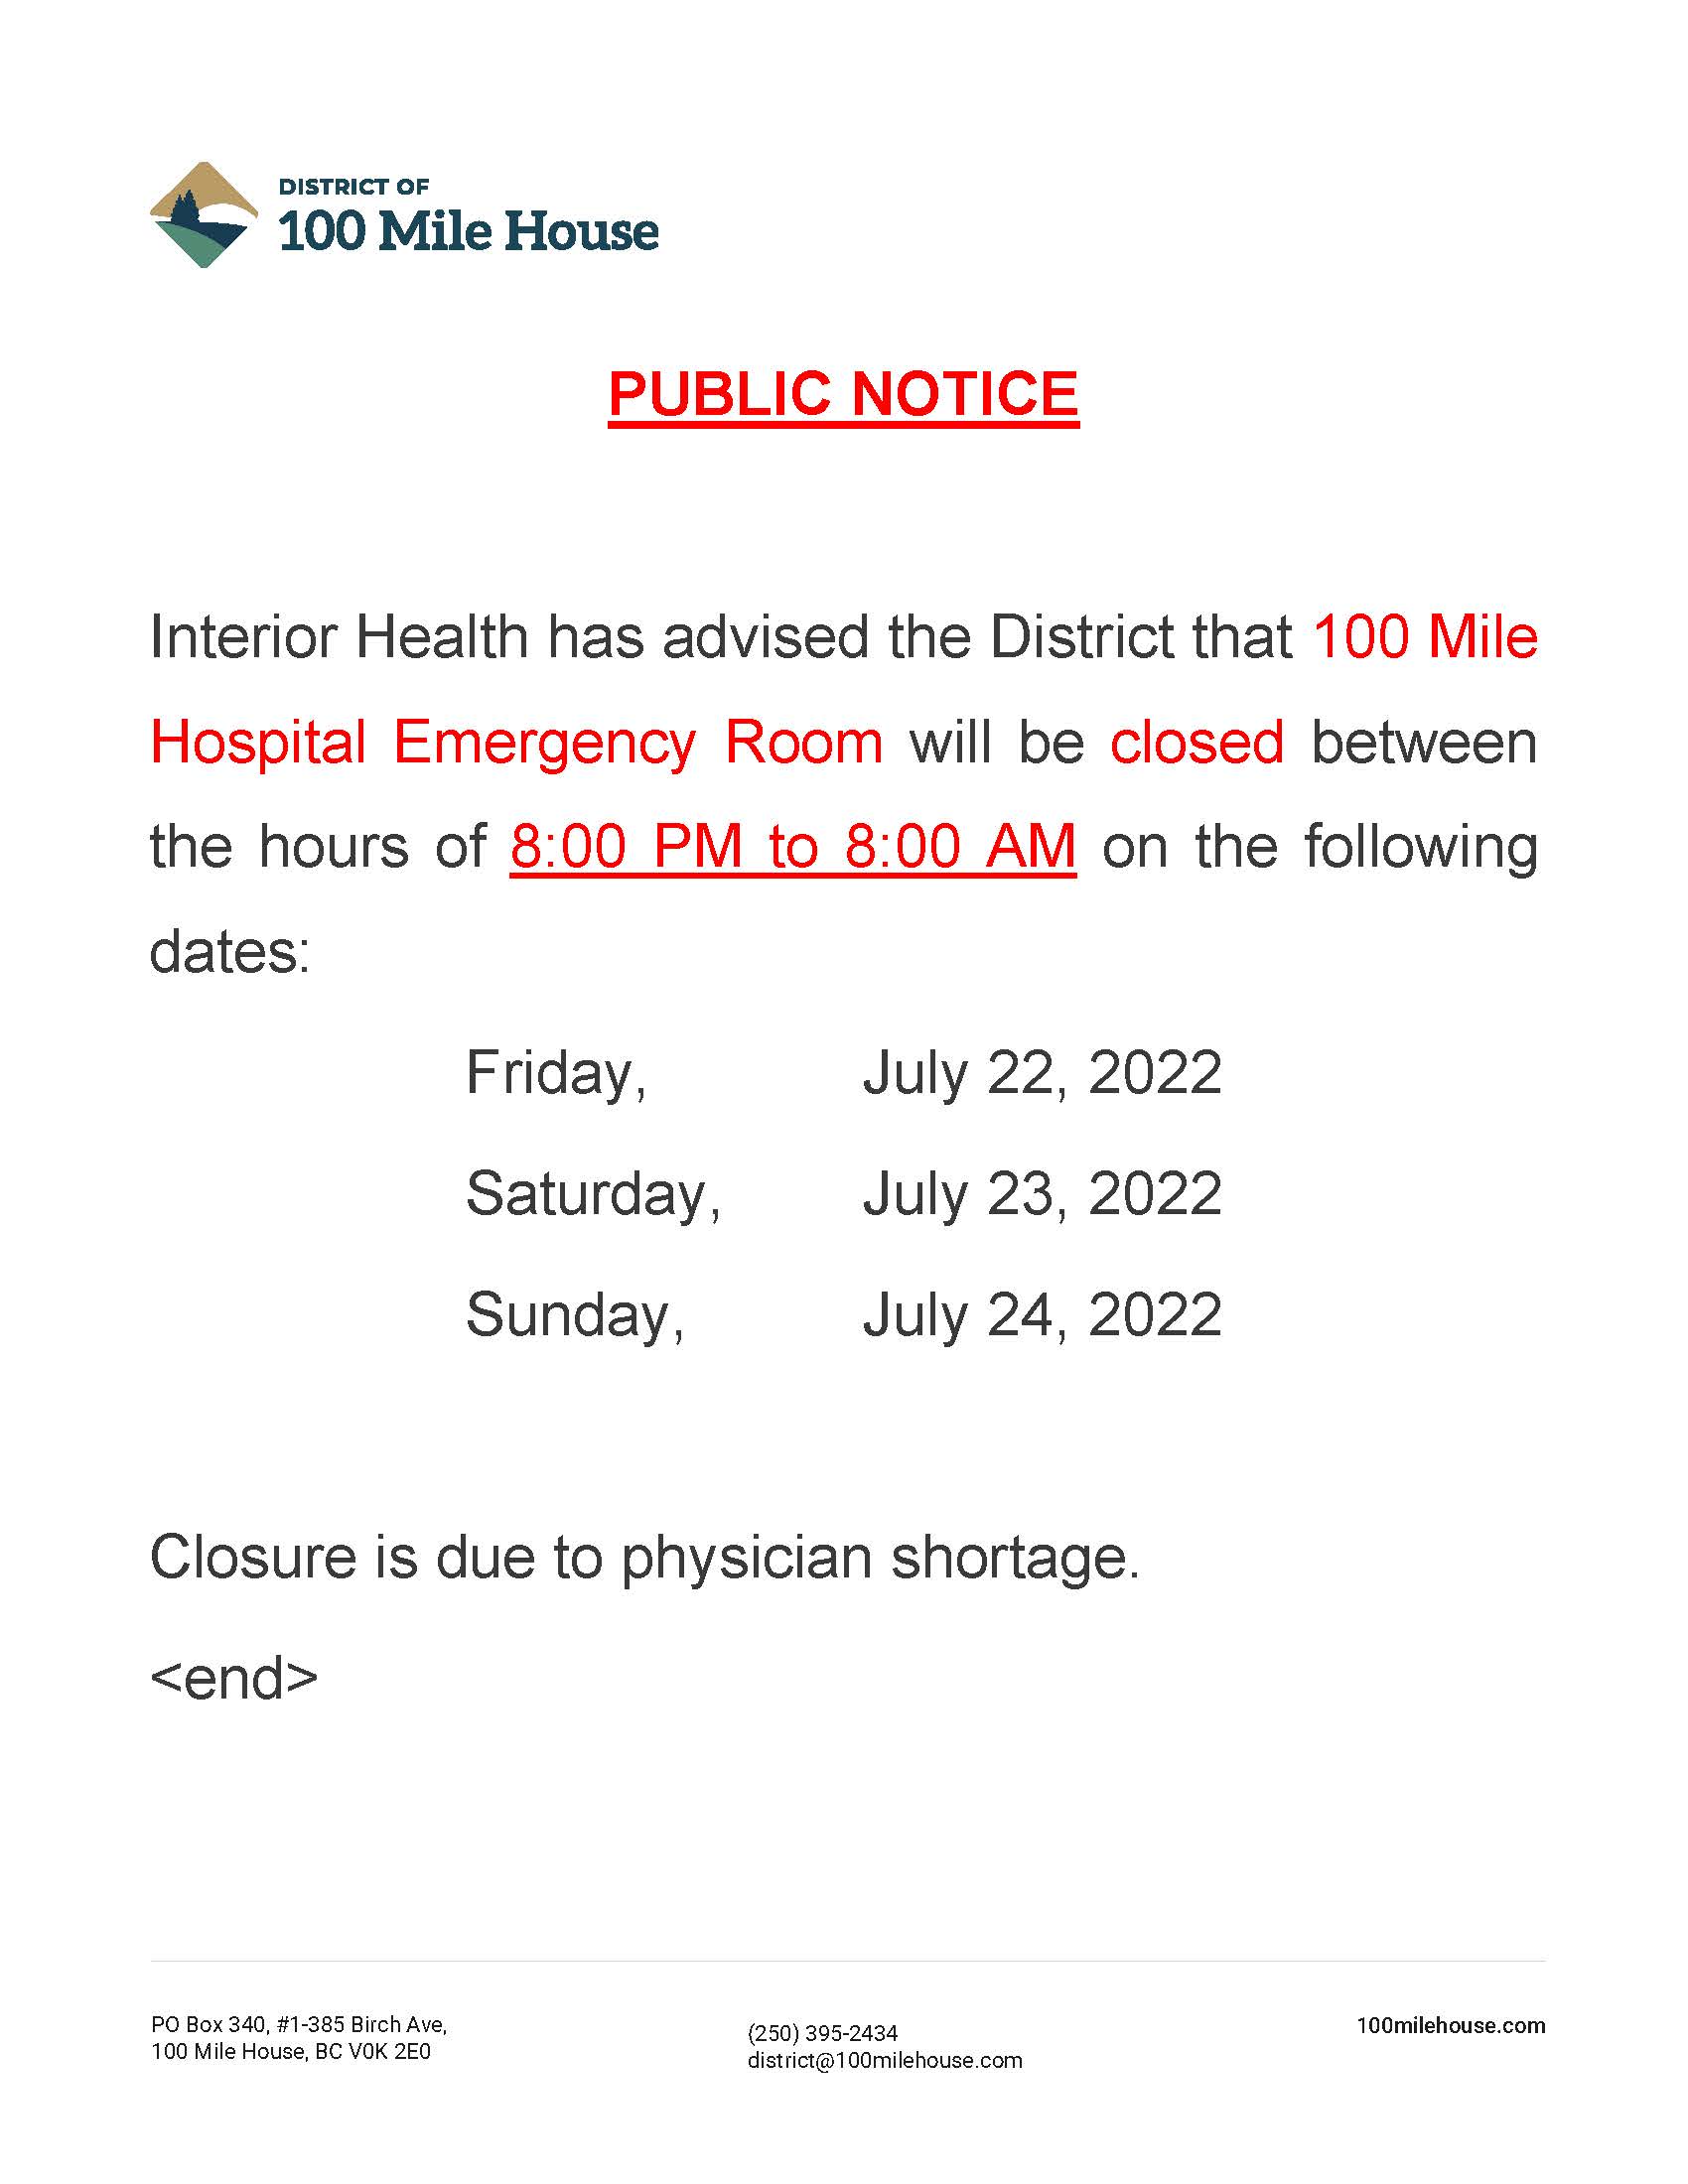 Emergency Room Closure July 22 to 24th 2022.jpg